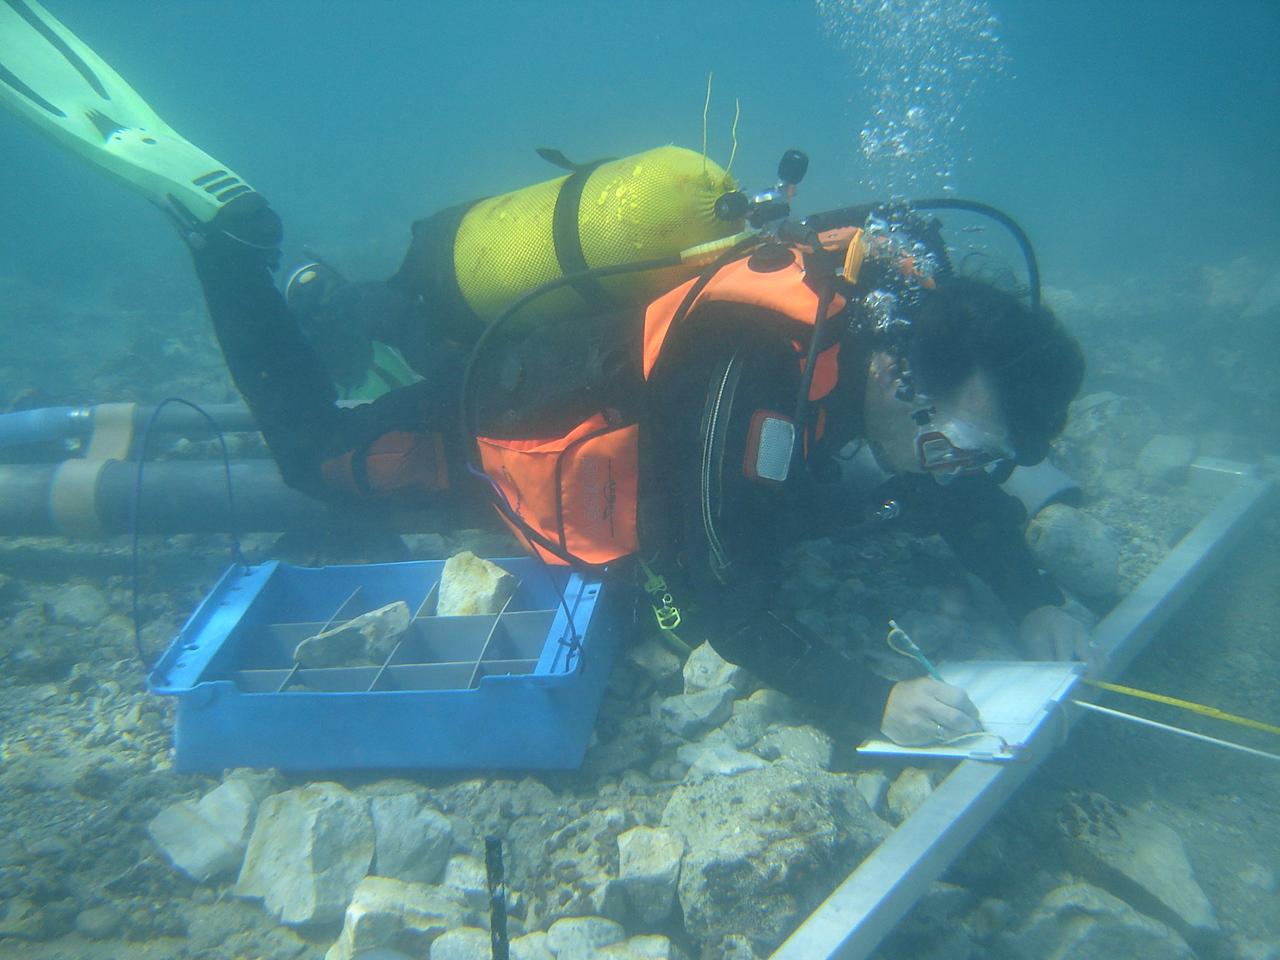 Recording underwater finds